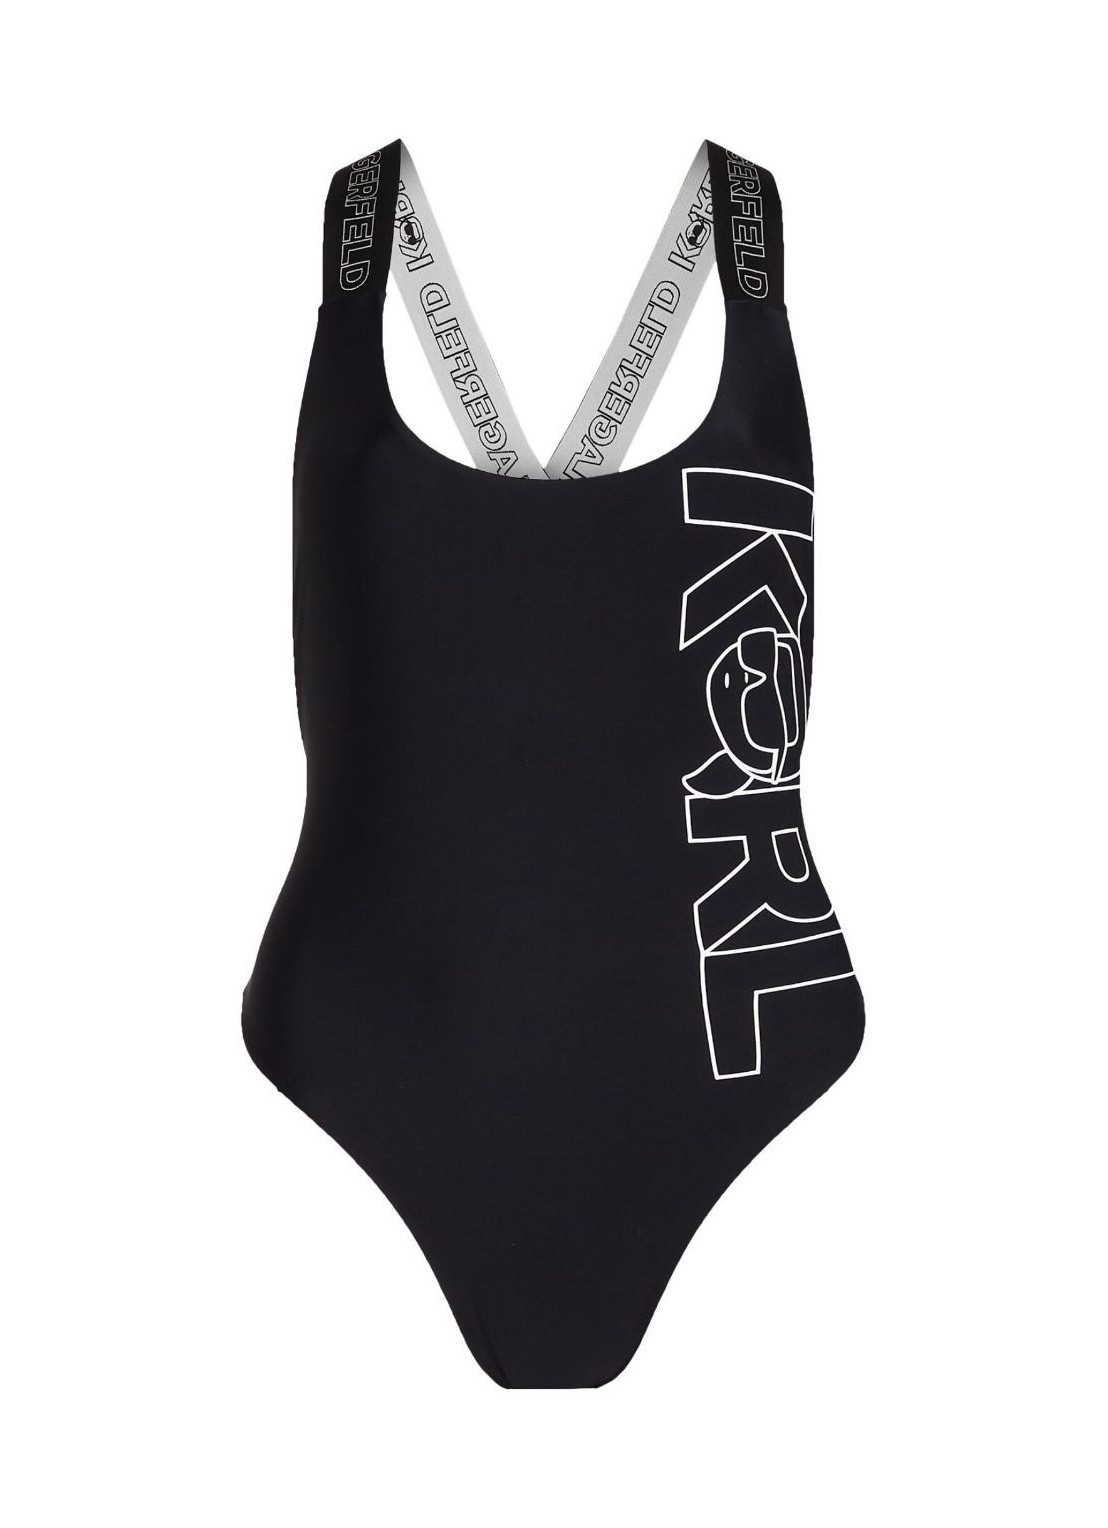 BaA'ador karl lagerfeld swimsuit woman ikonik 2.0 swimsuit w/ elastic 235w2228 999 talla XL
 